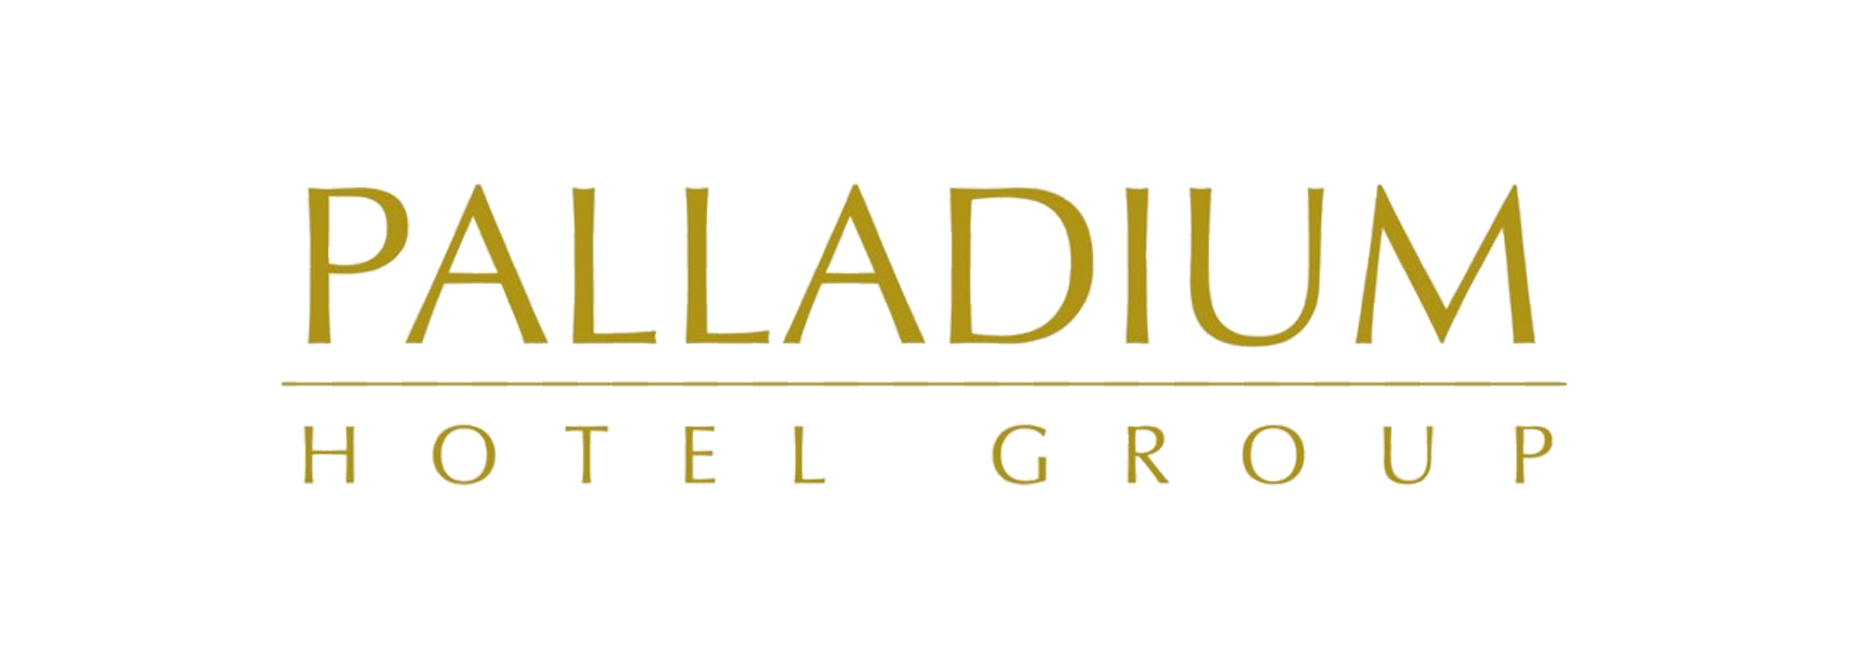 palladium-1